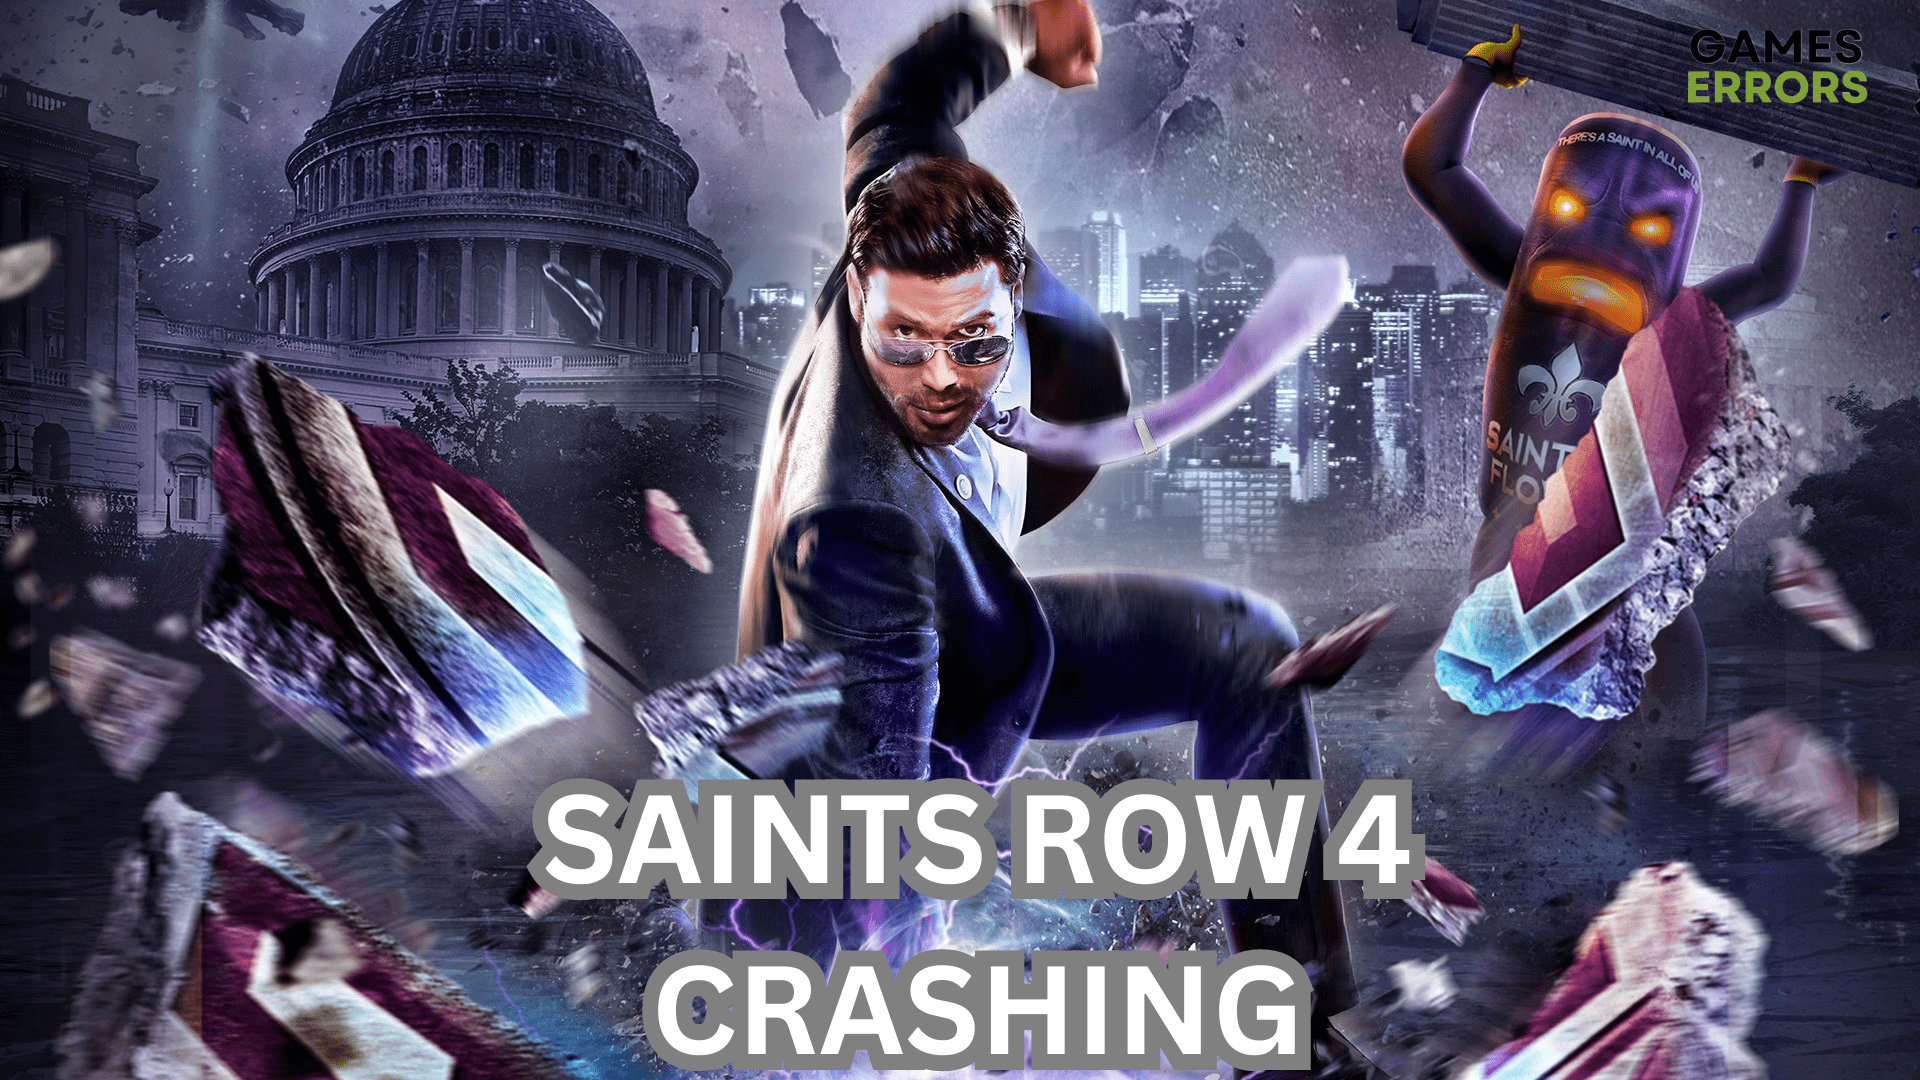 Saints Row 4 keeps crashing